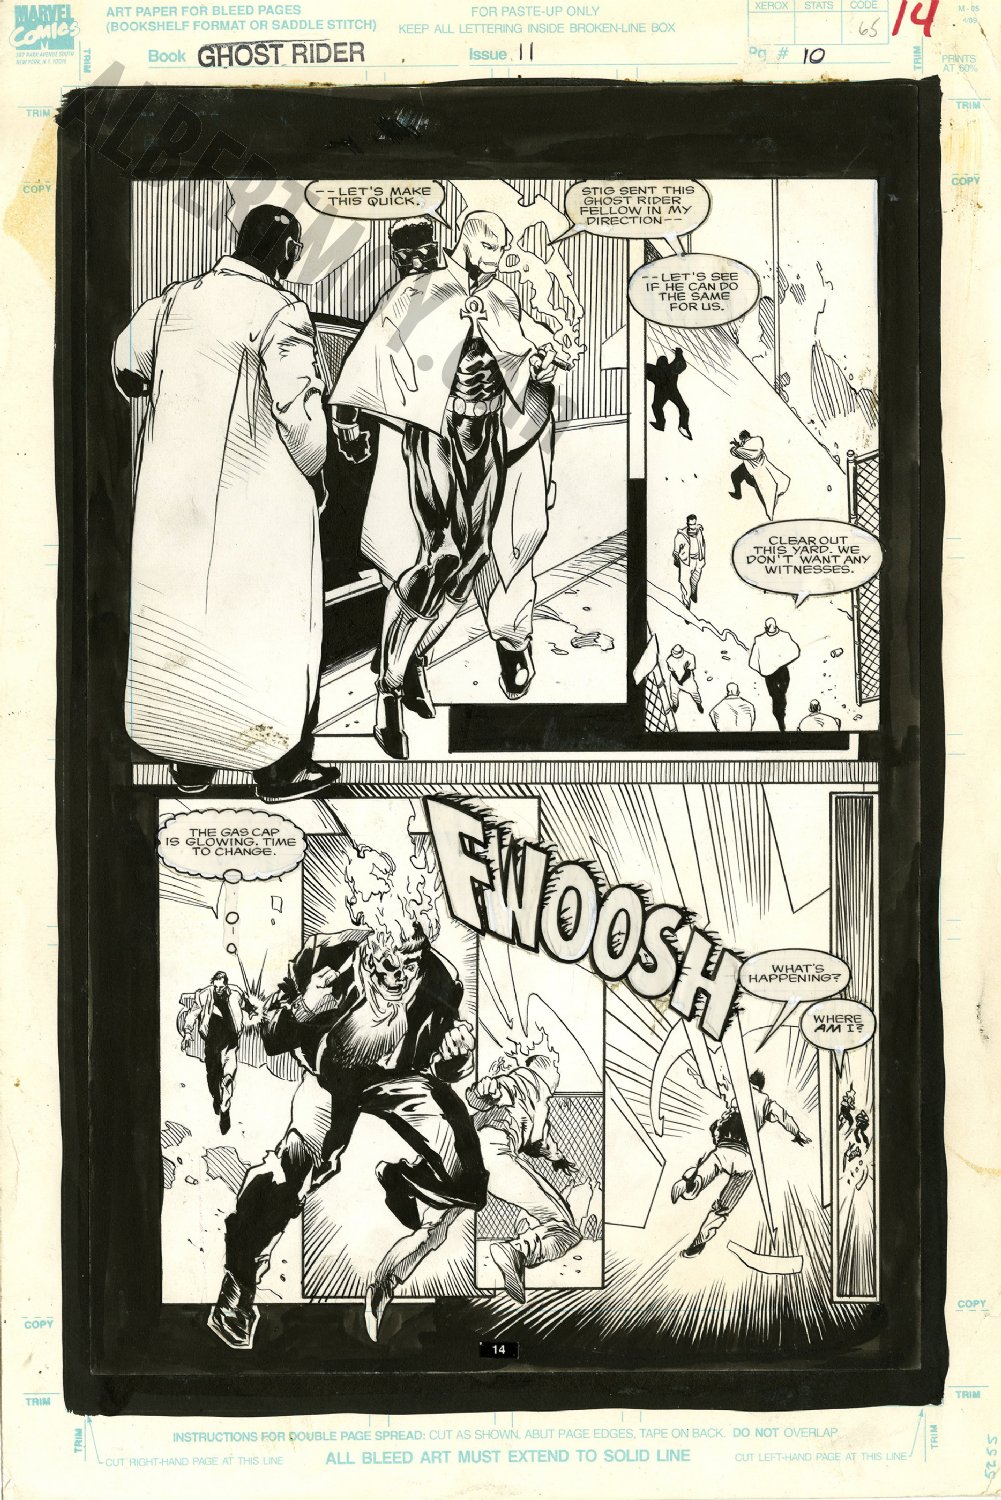 Albert Moy : Original Comic Art - Ghost Rider by Mark Texeira